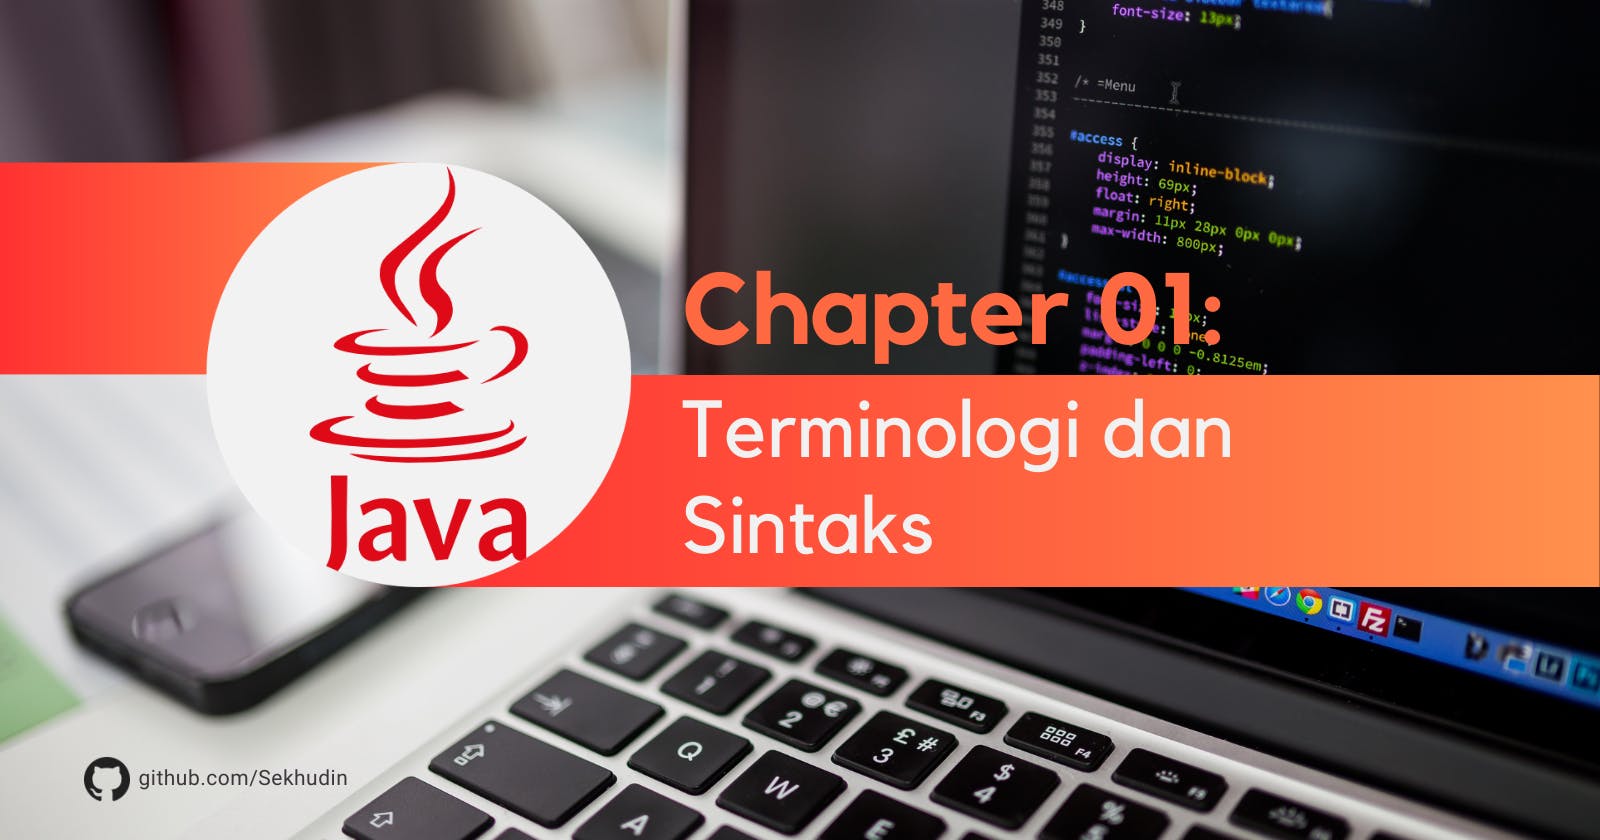 Java Fundamentals - Terminologi dan Sintaks